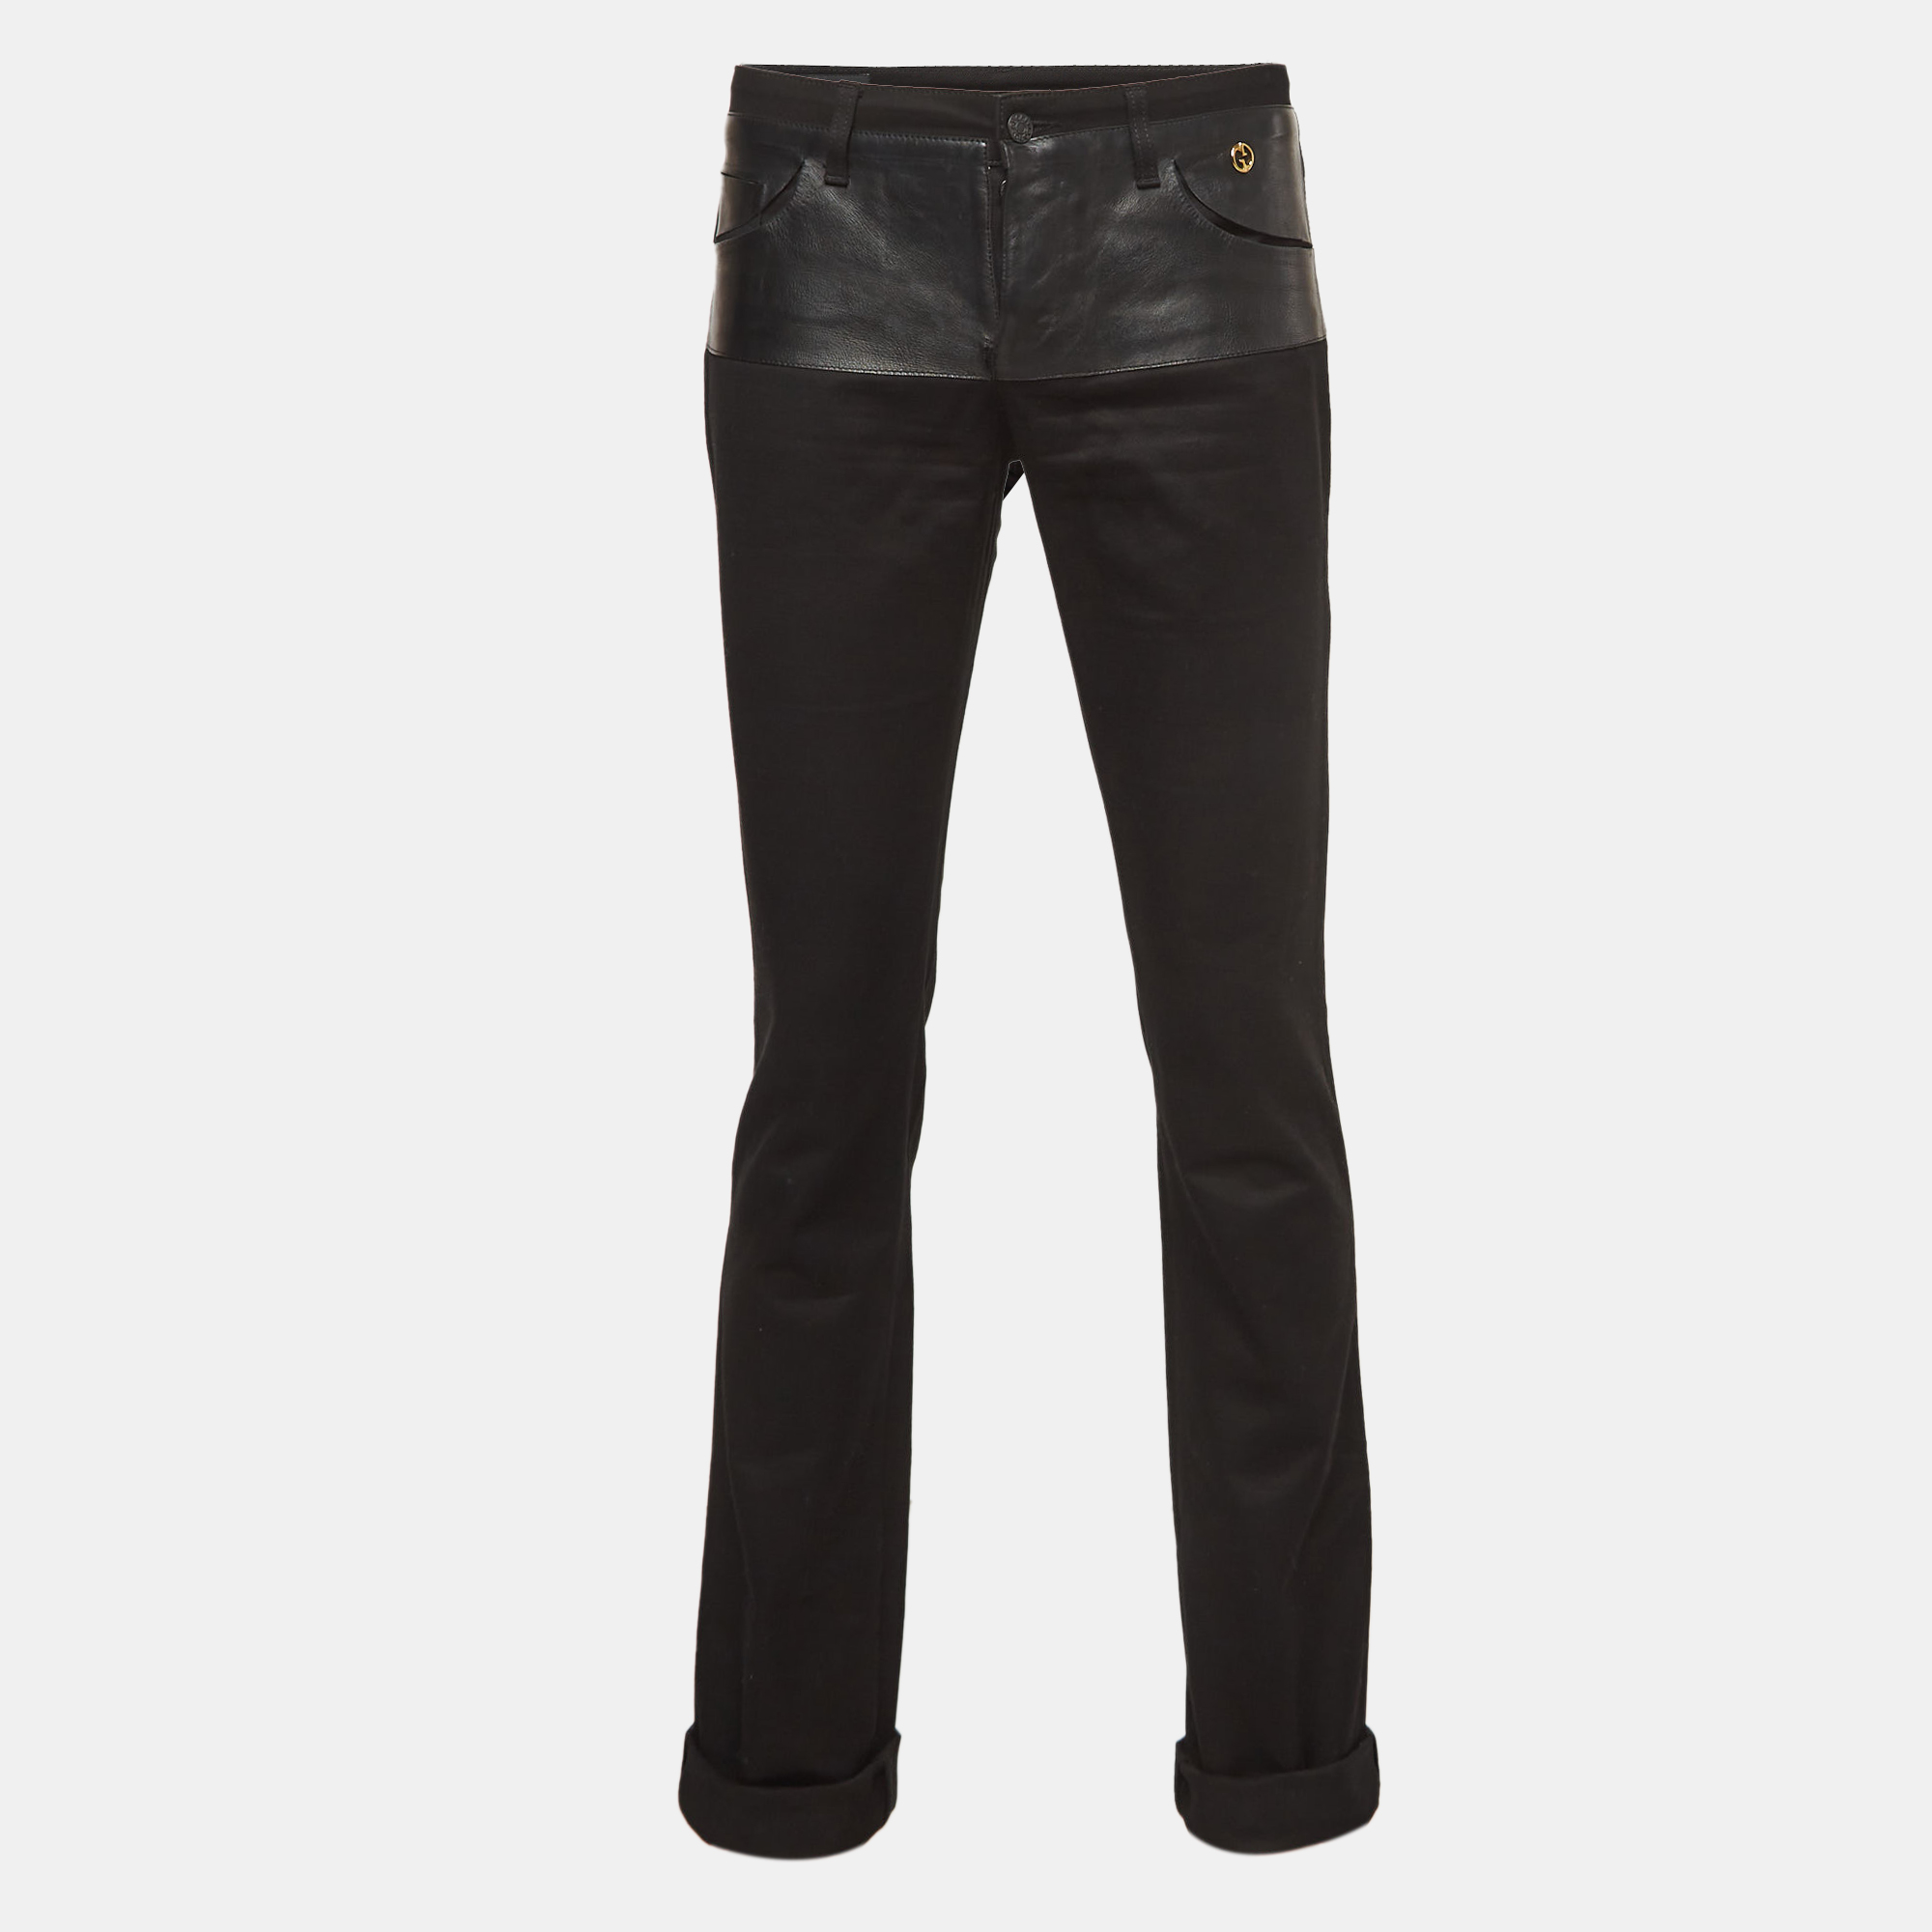 Gucci black cotton twill leather trim pants xs